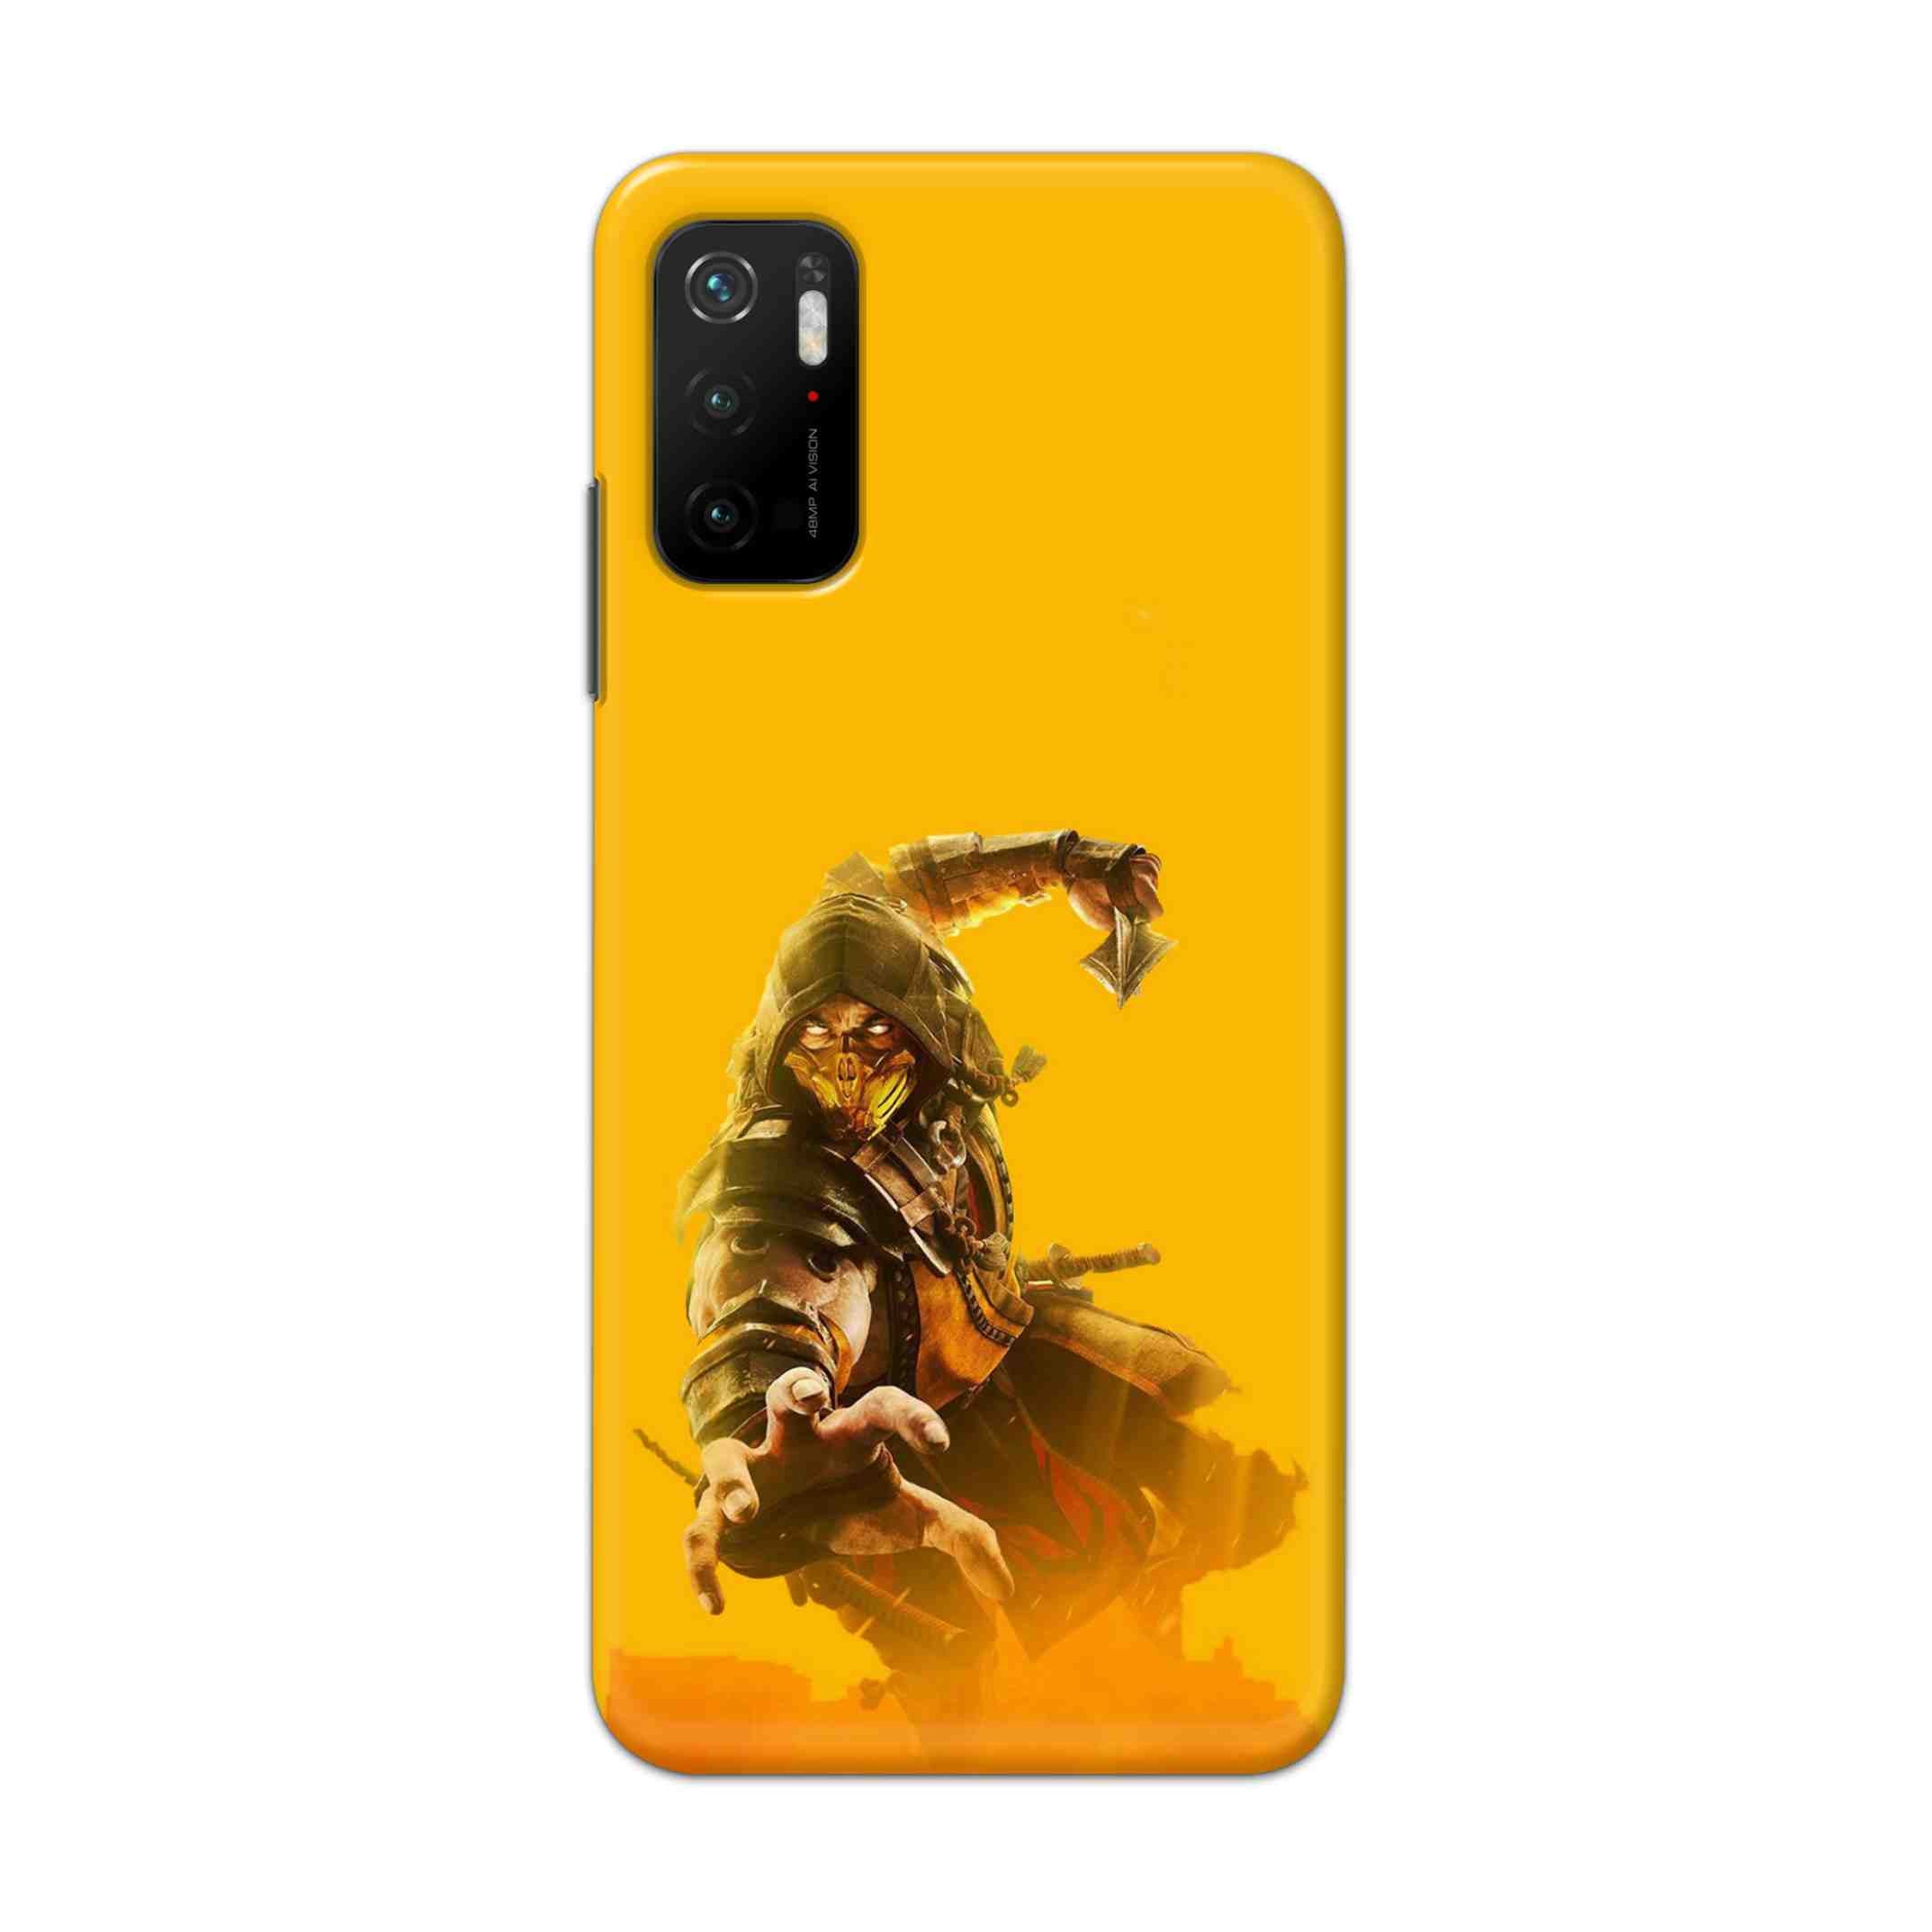 Buy Mortal Kombat Hard Back Mobile Phone Case Cover For Poco M3 Pro 5G Online